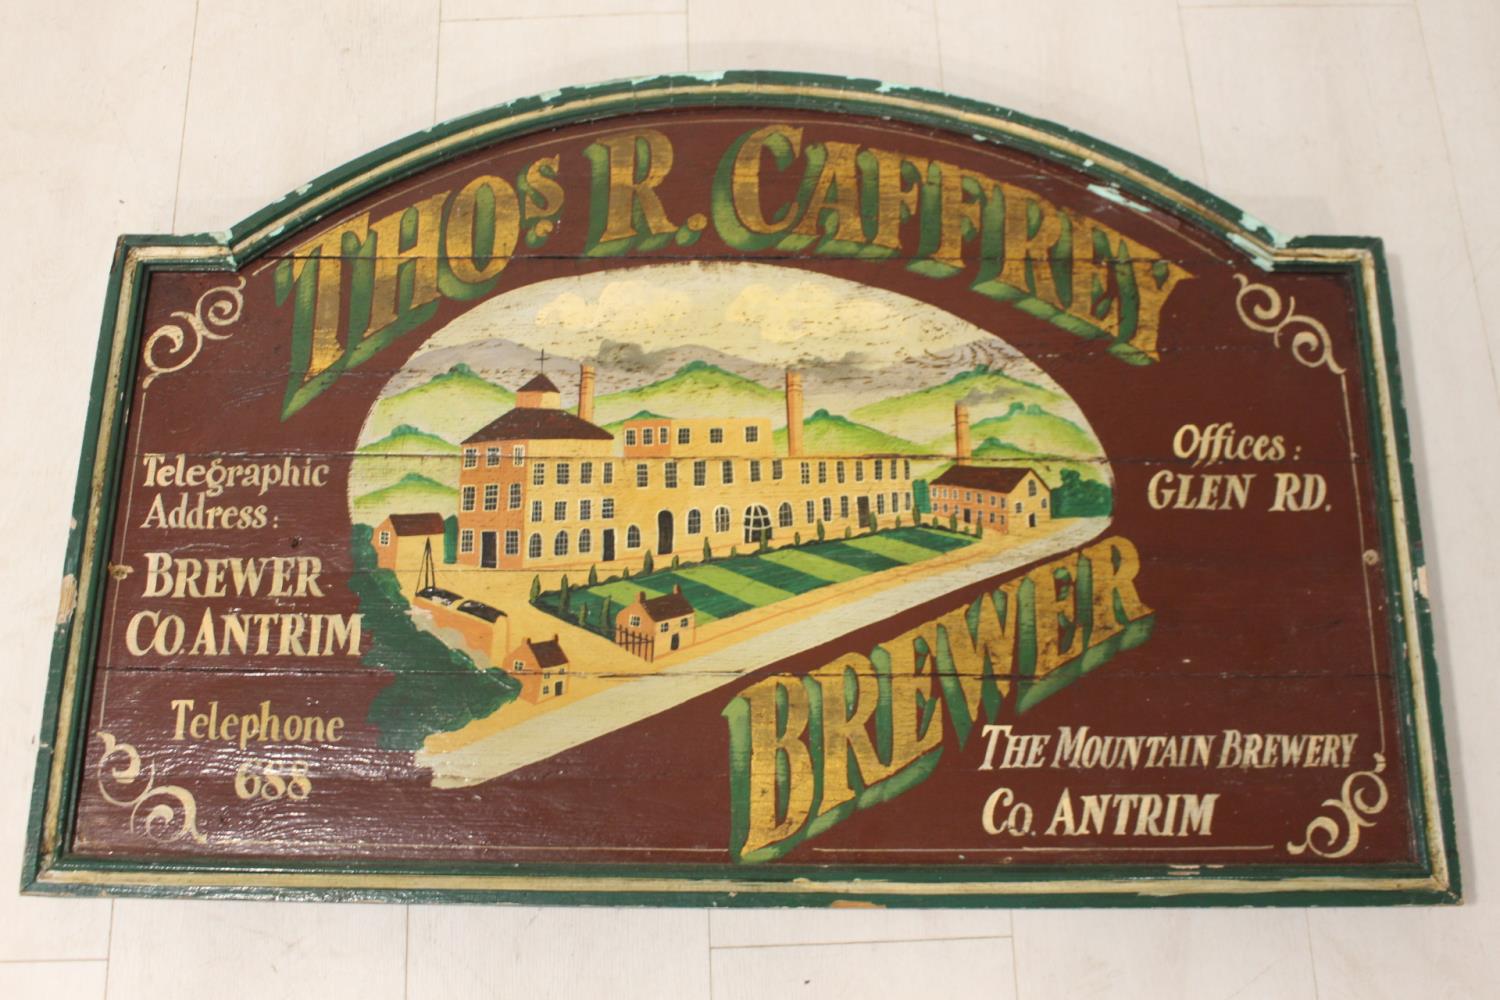 Tho's R. Caffrey Brewer advertising board